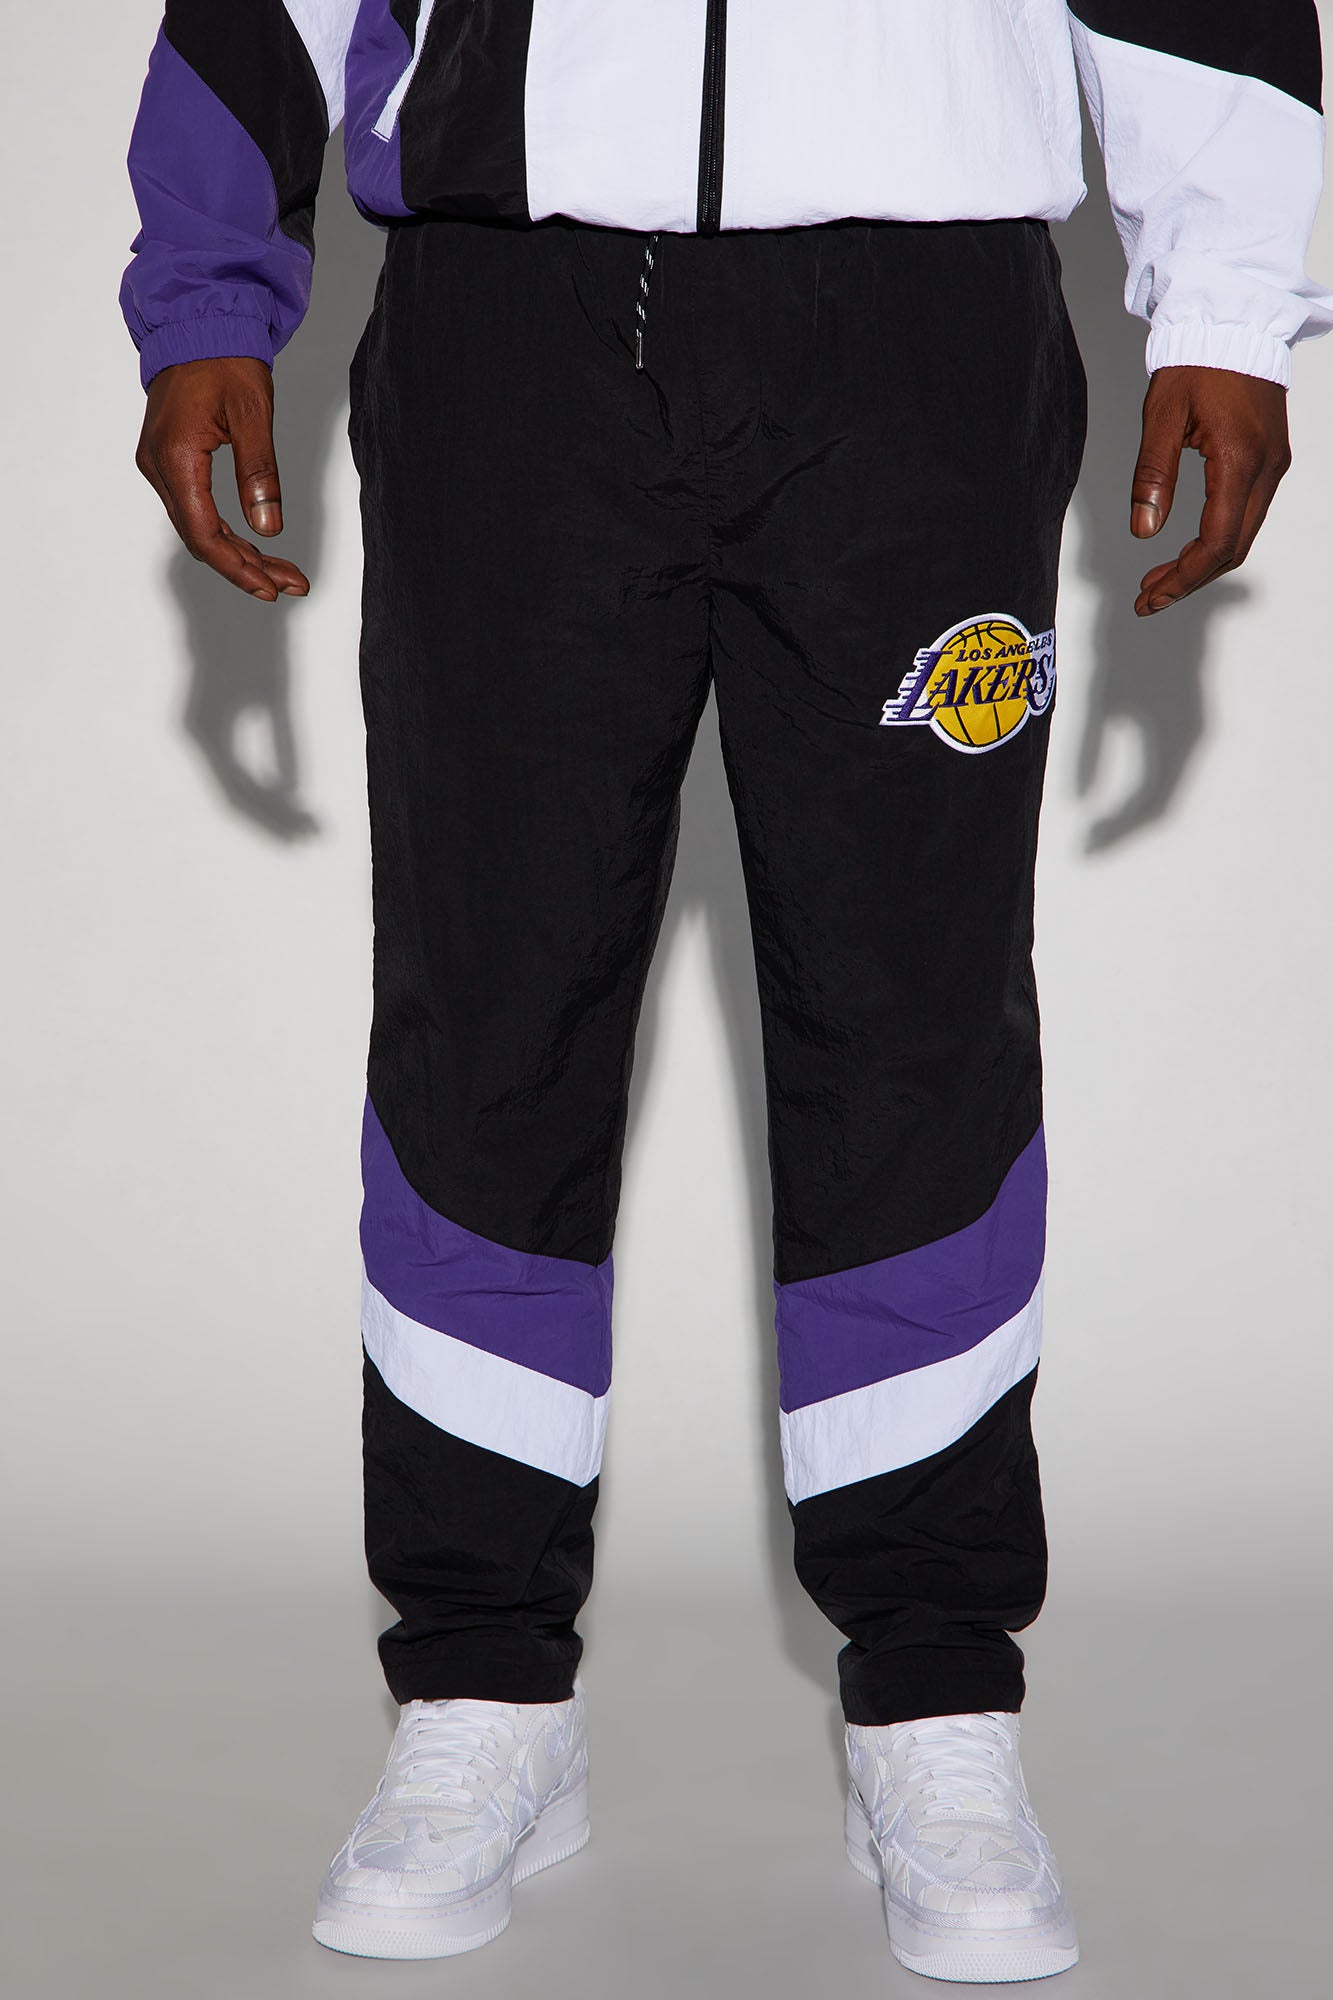 Men's Lakers on The Bias Mesh Shorts Combo in Purple Size XL by Fashion Nova